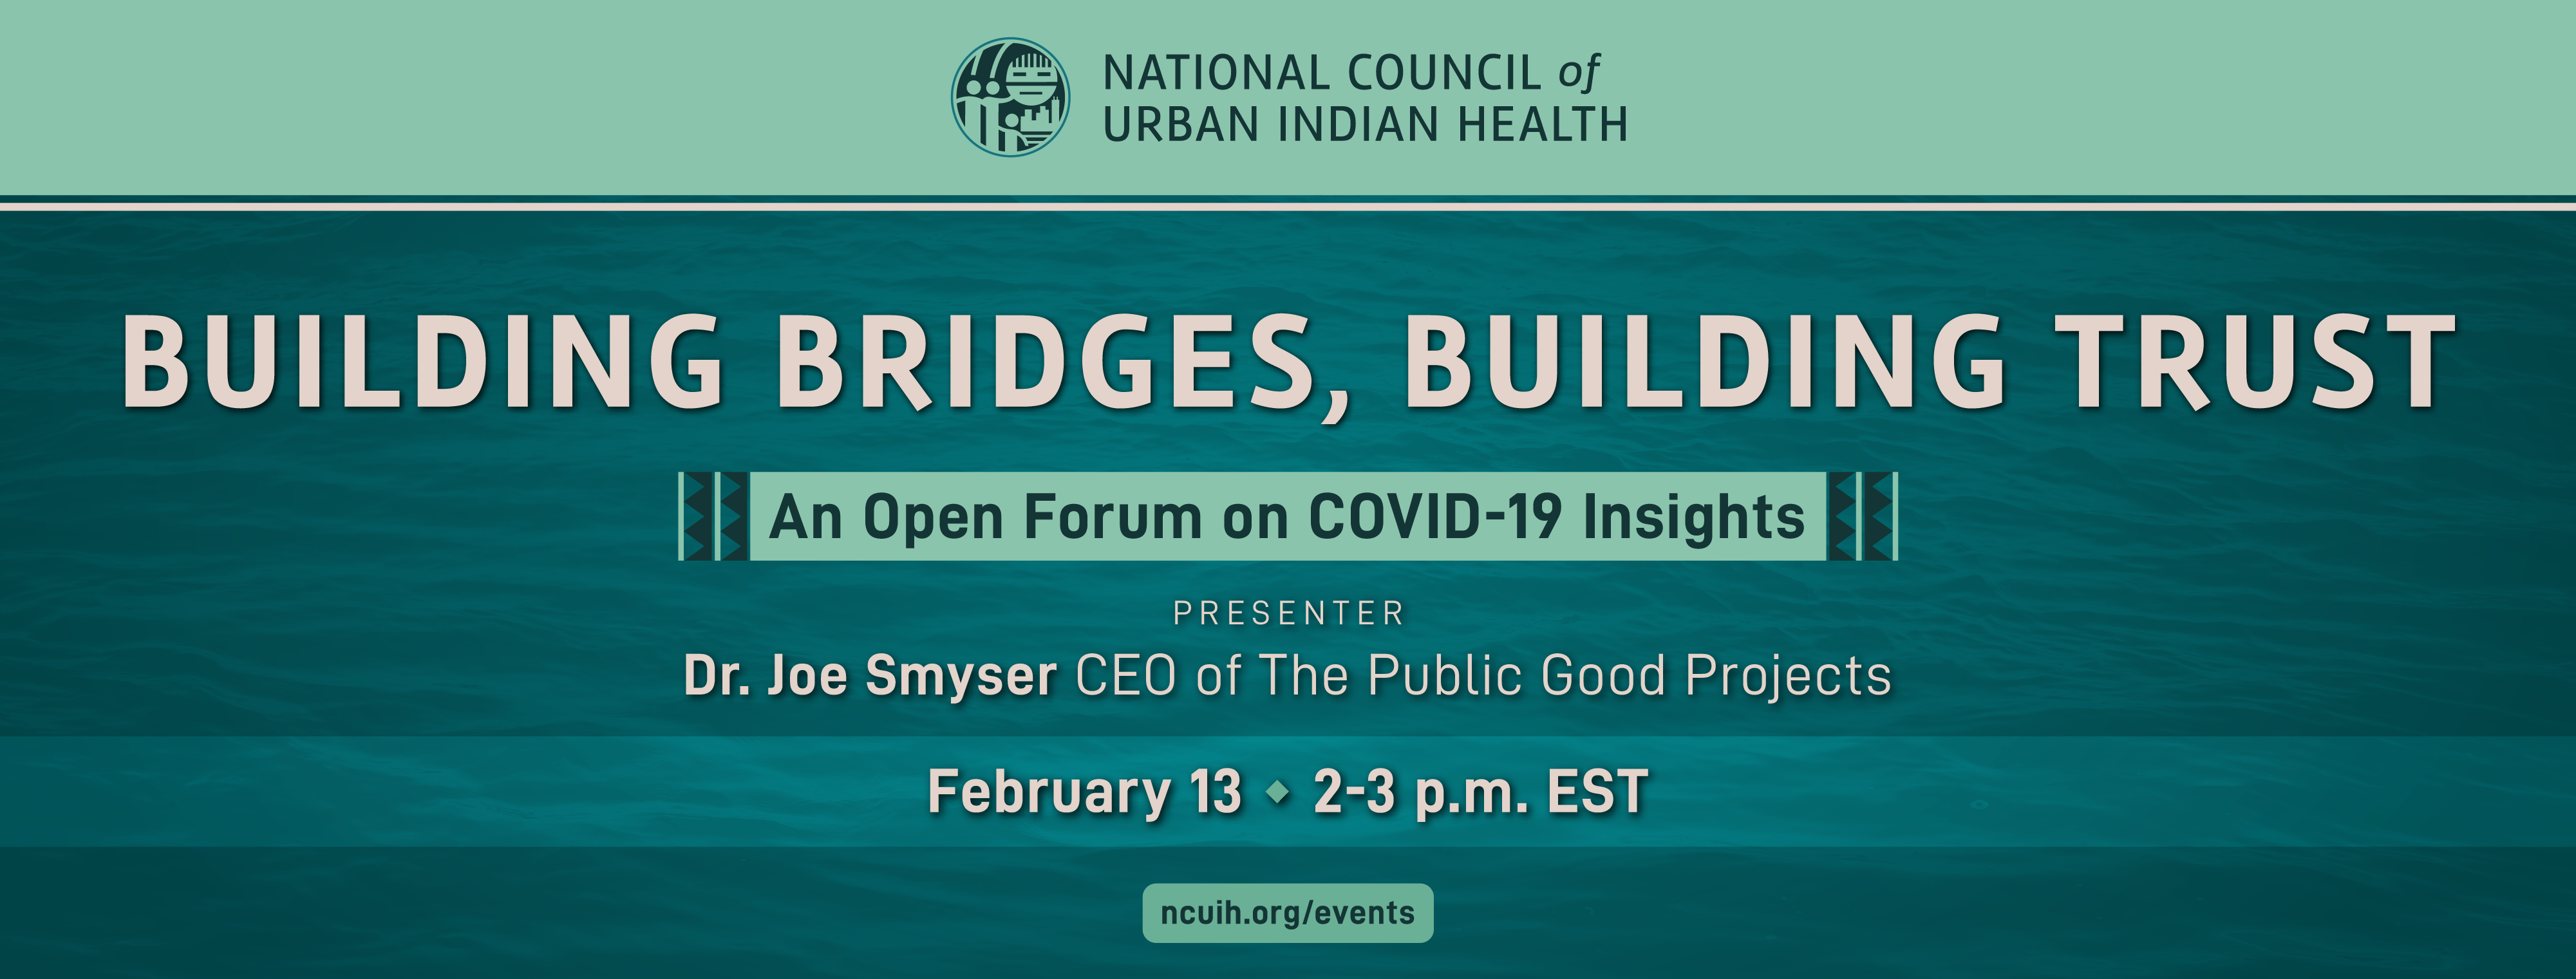 Building Bridges, Building Trust: An Open Forum on COVID-19 Insights